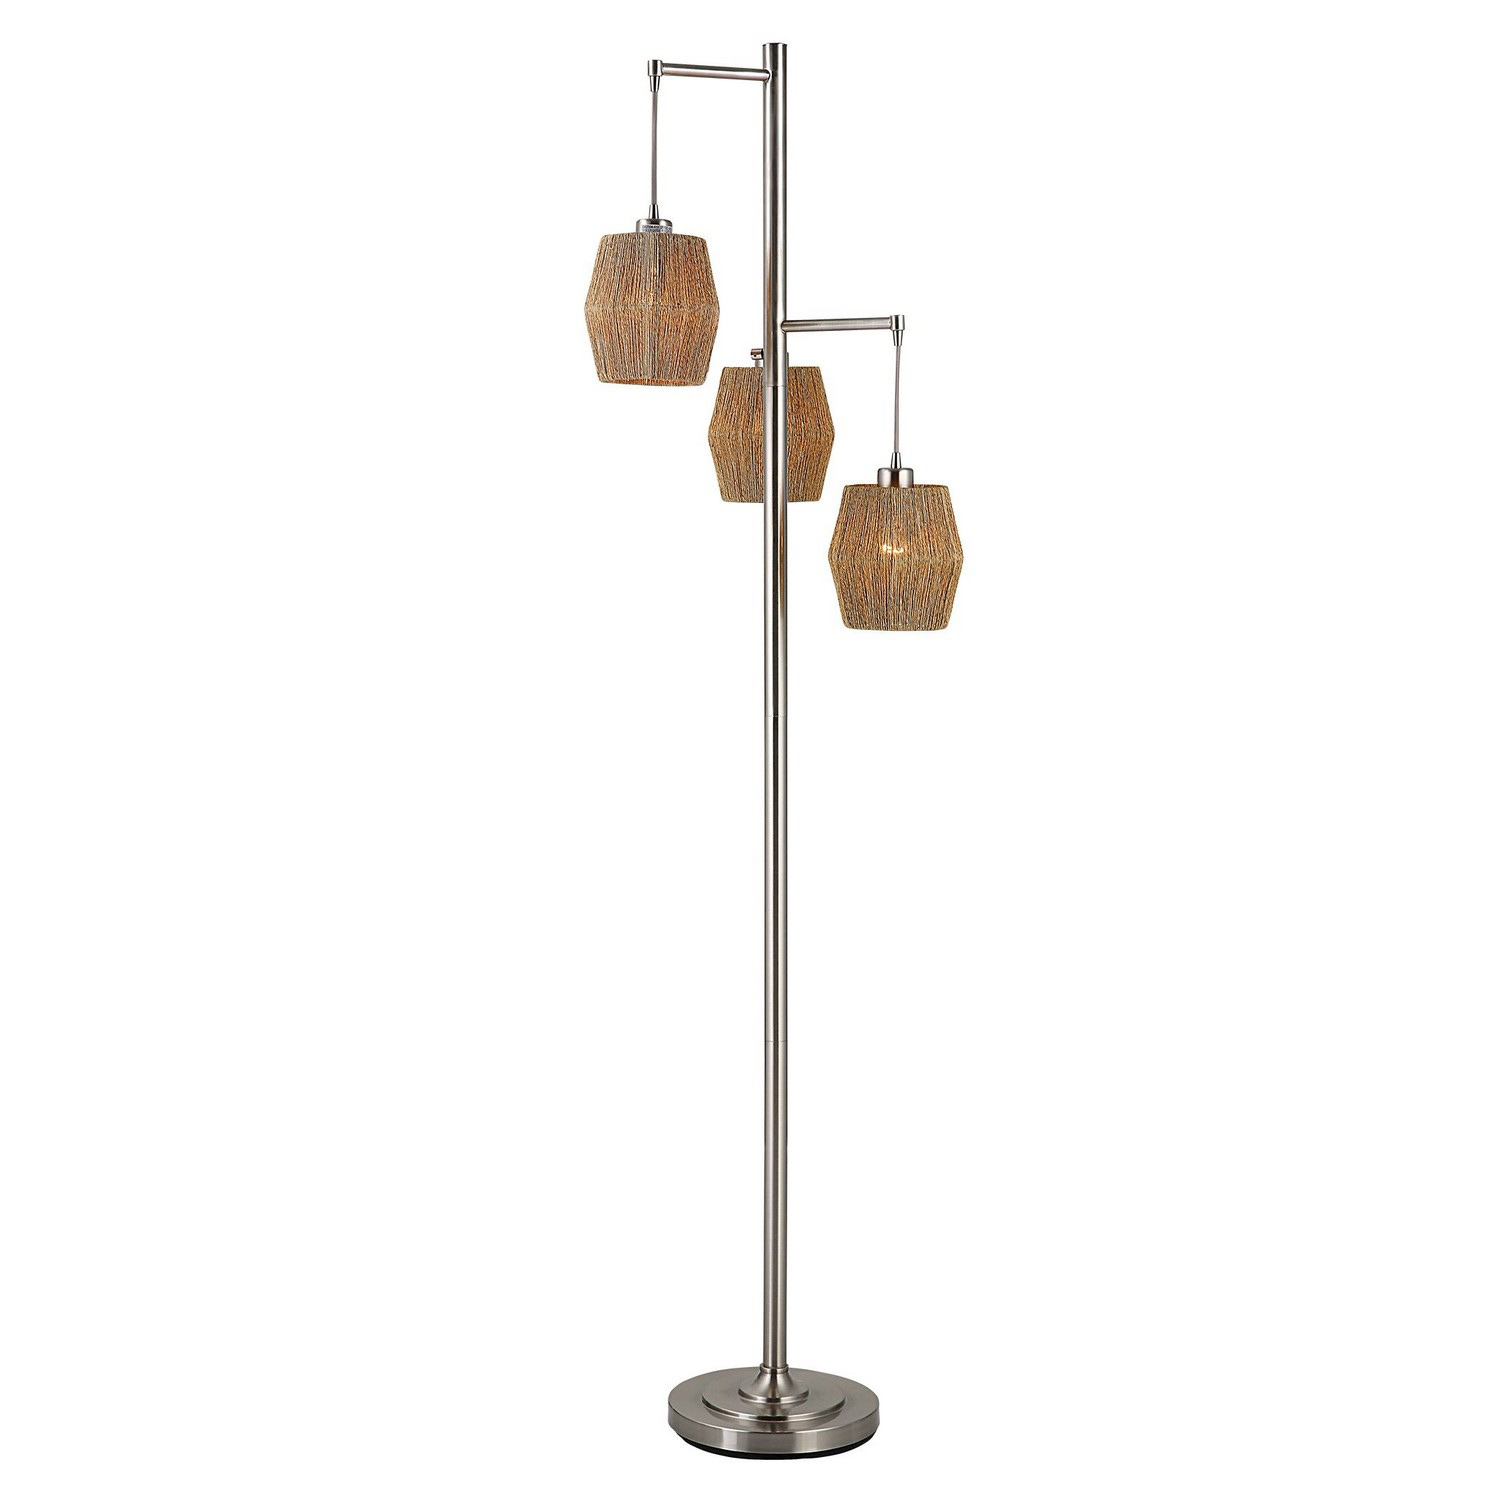 Uttermost W26090-1 Floor Lamp - Brushed Nickel